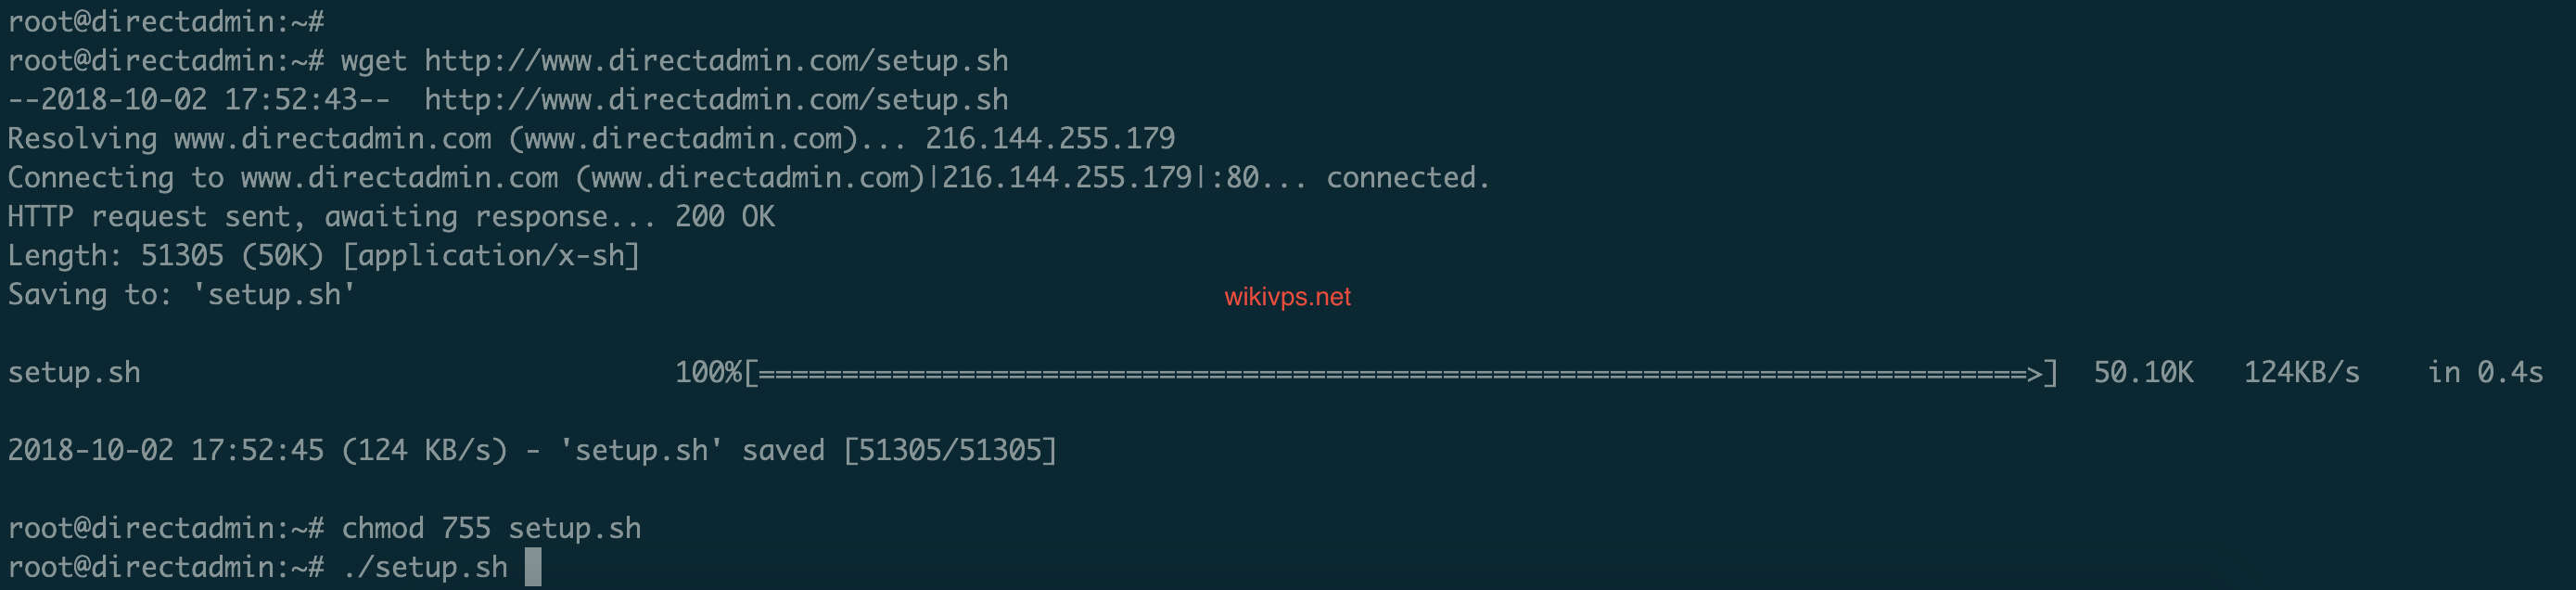 wikivps-installation progress